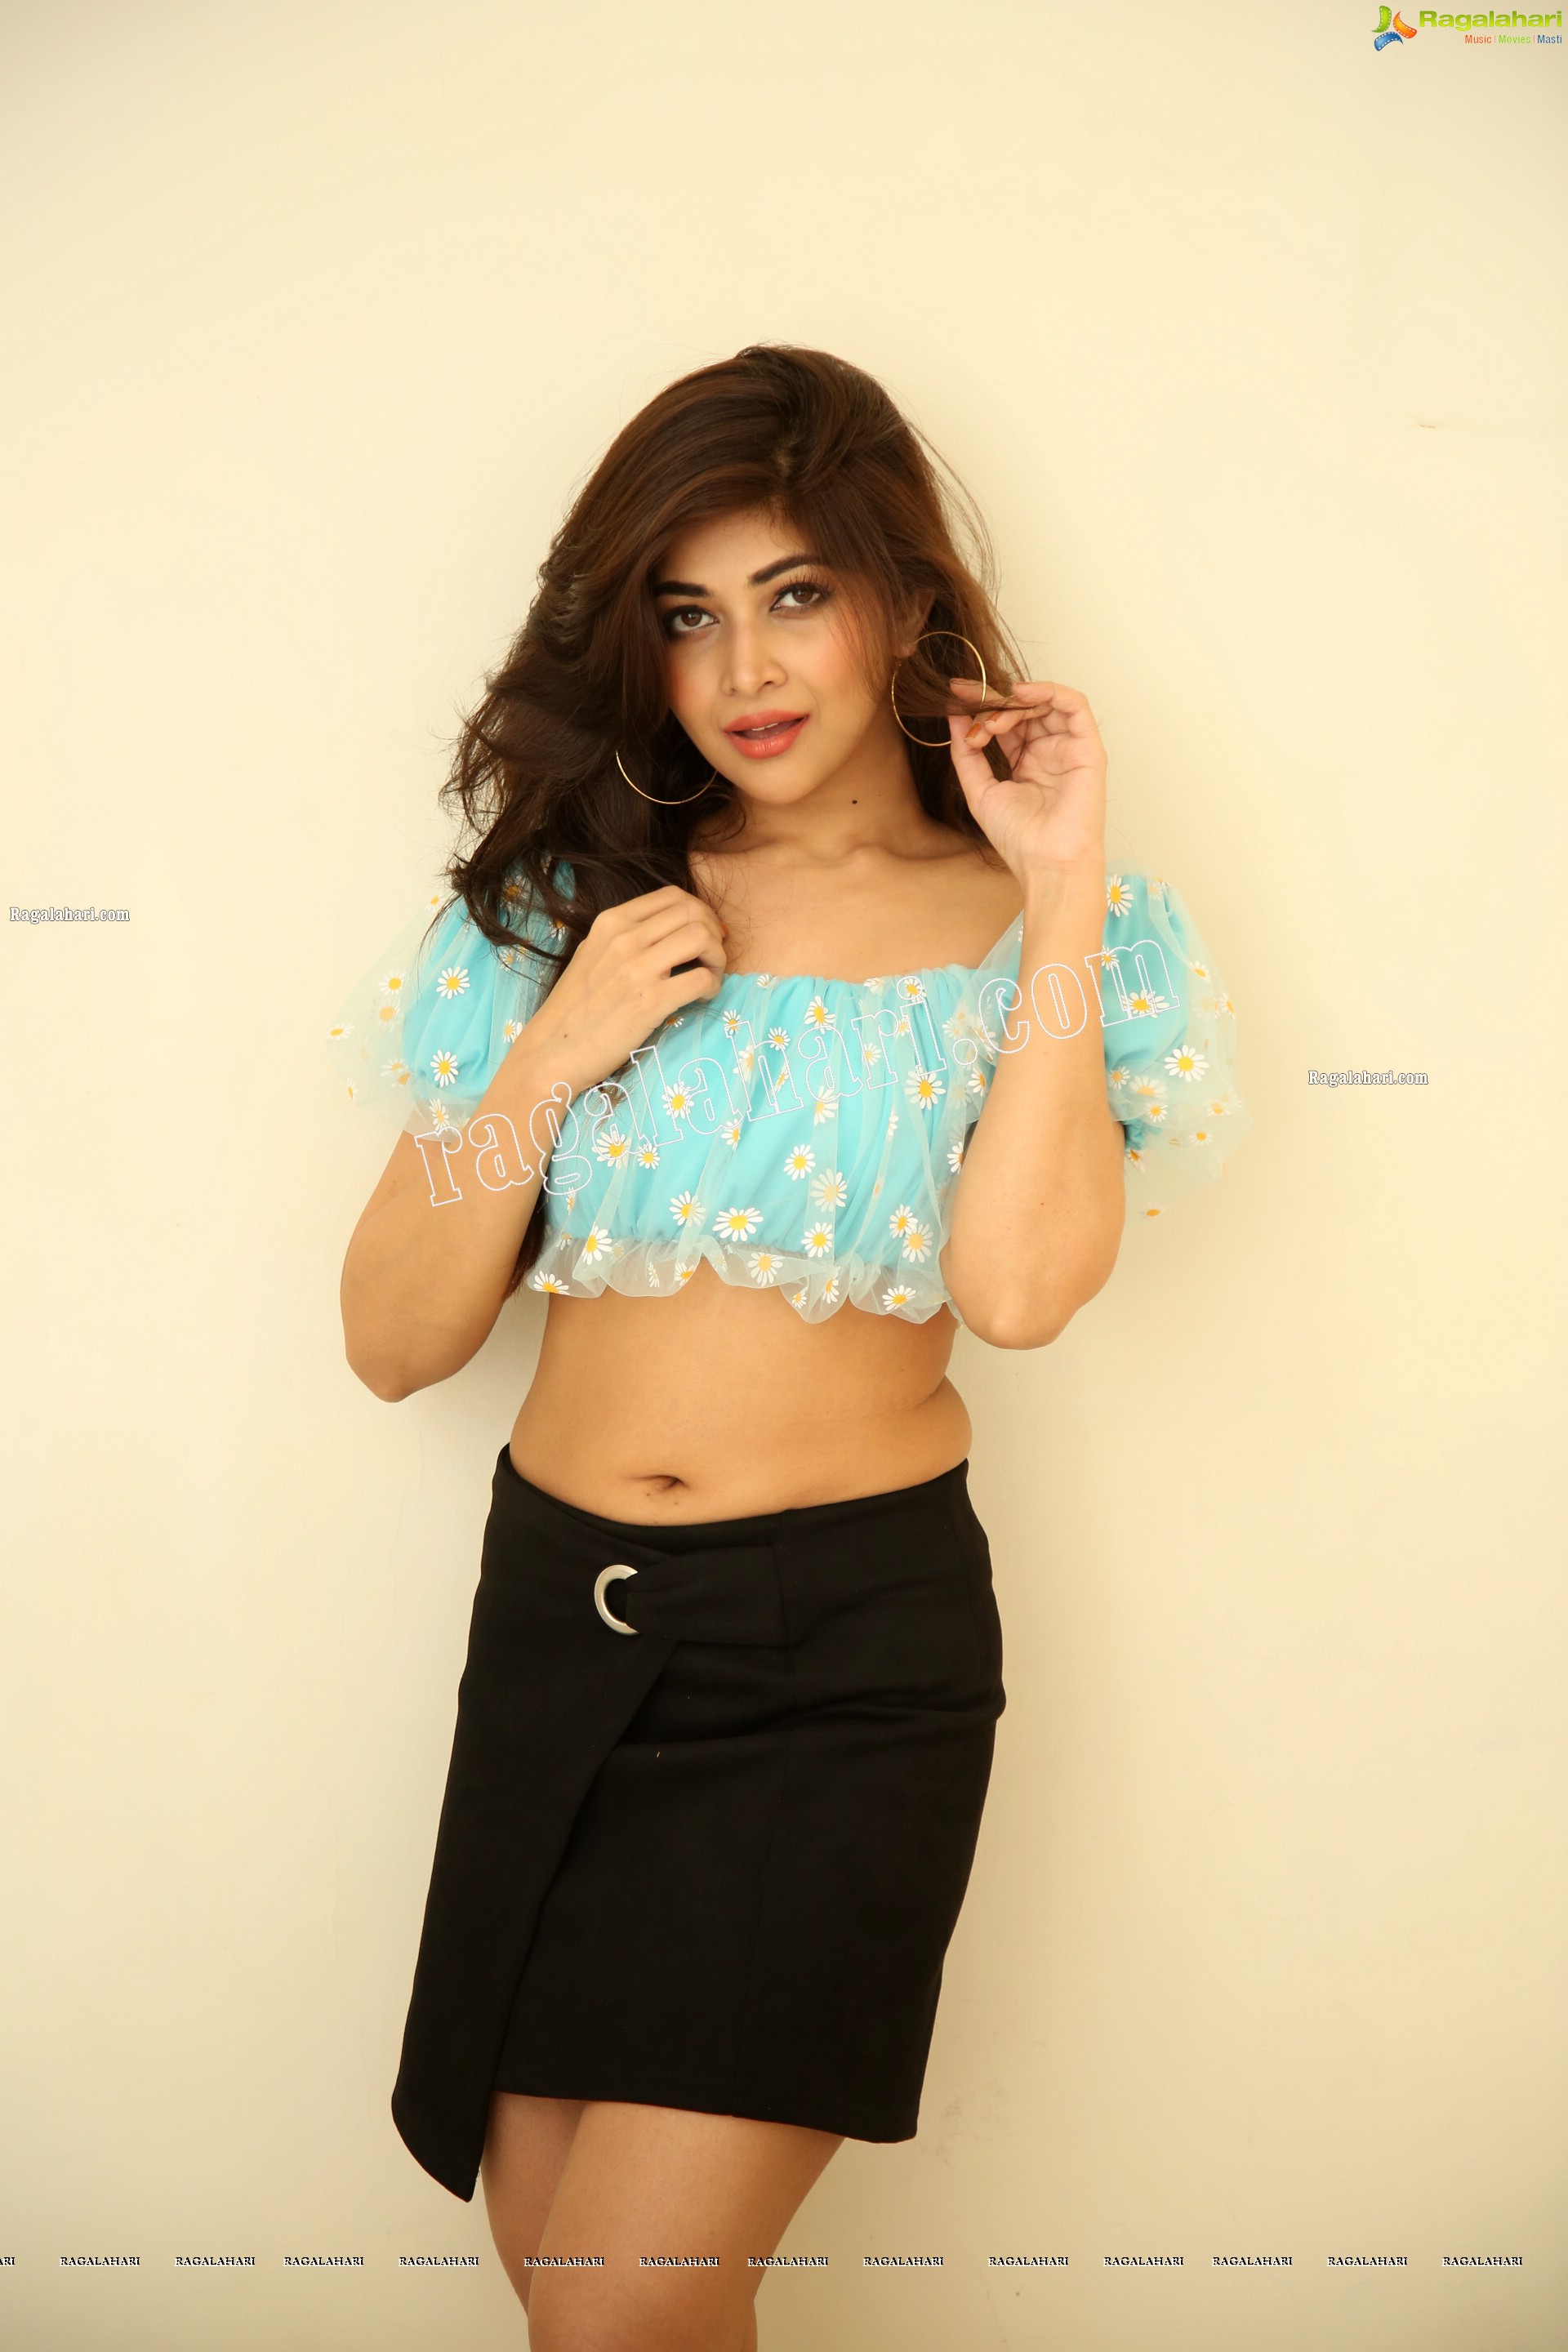 Srijita Gosha in Aqua-Blue Crop Top and Black Mini Skirt, Exclusive Photo Shoot